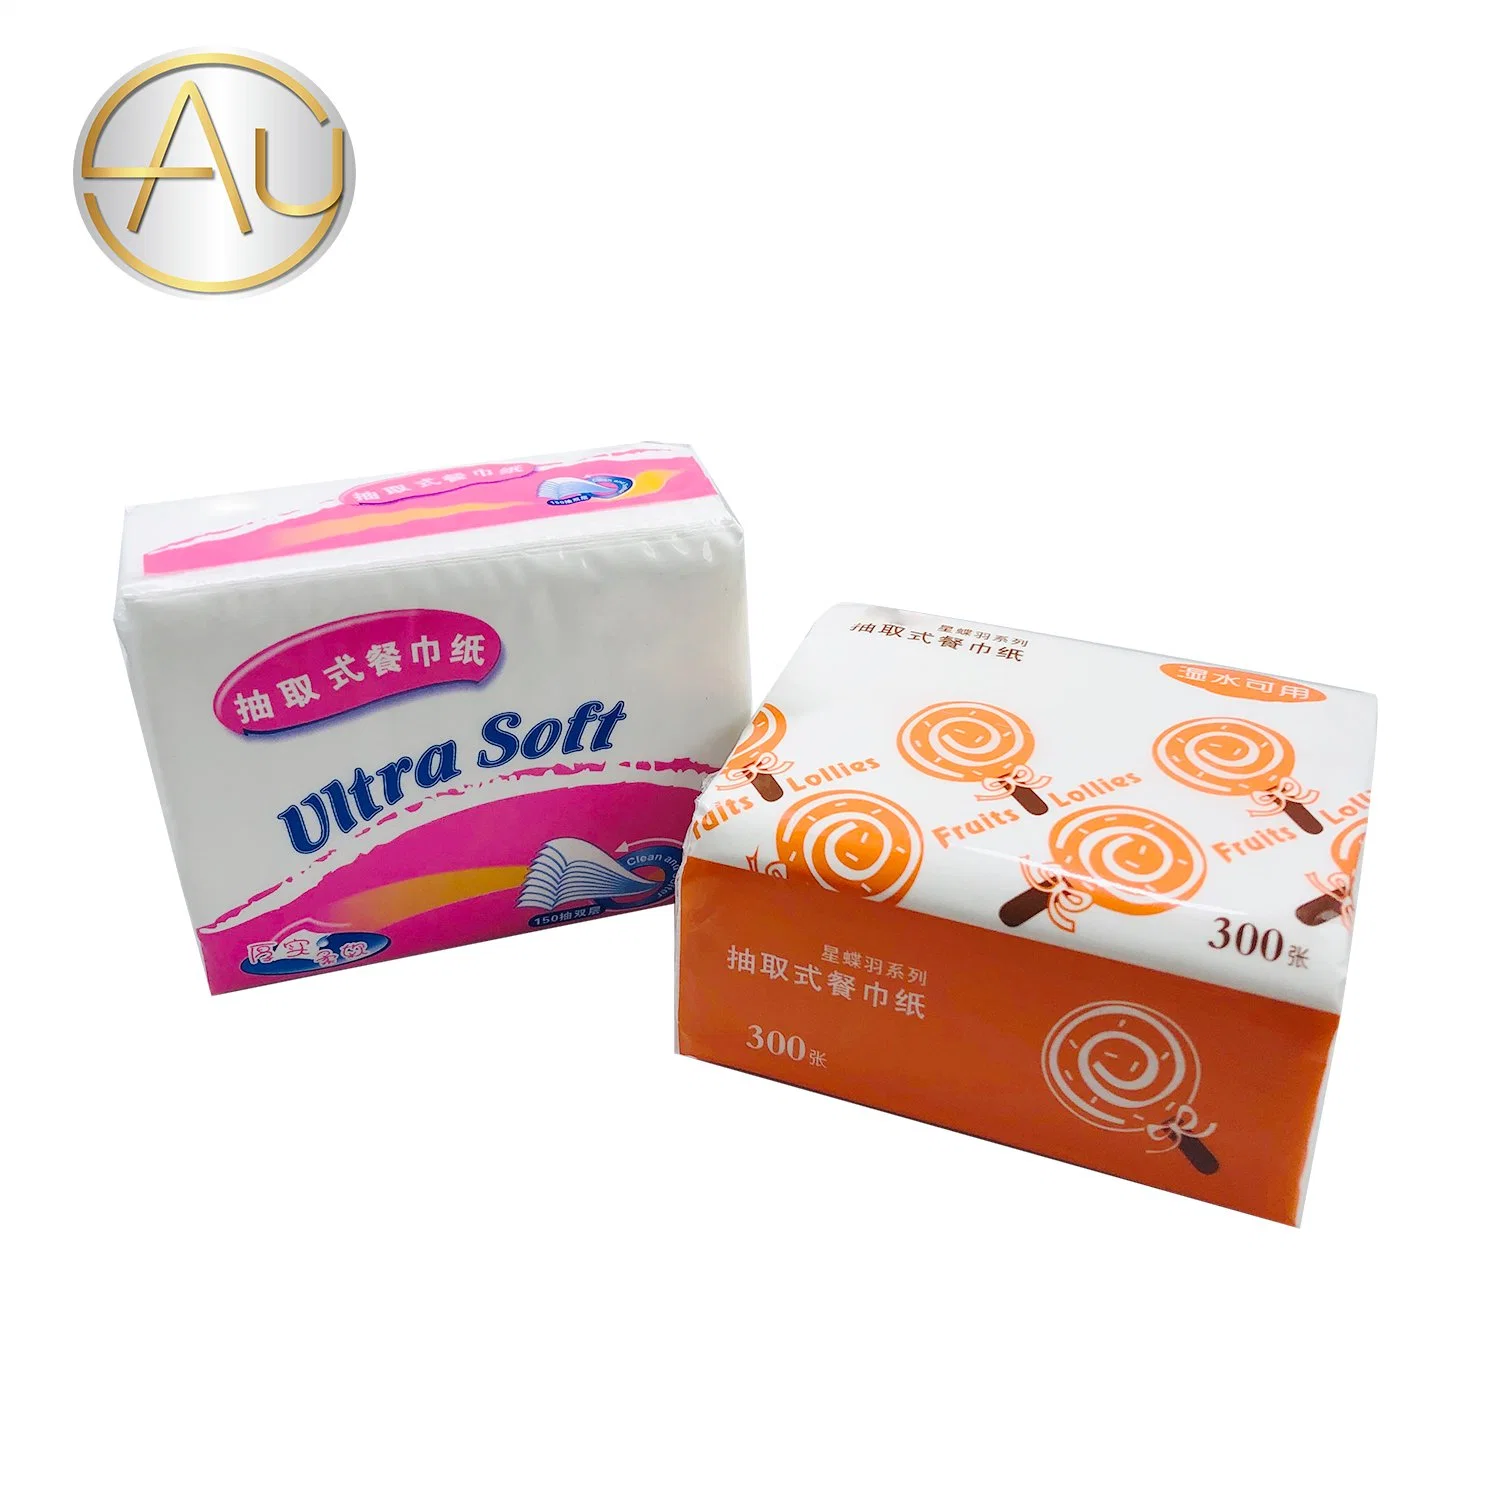 Atacado preço barato Hot Venda Soft Sanitary facial Tissue Paper